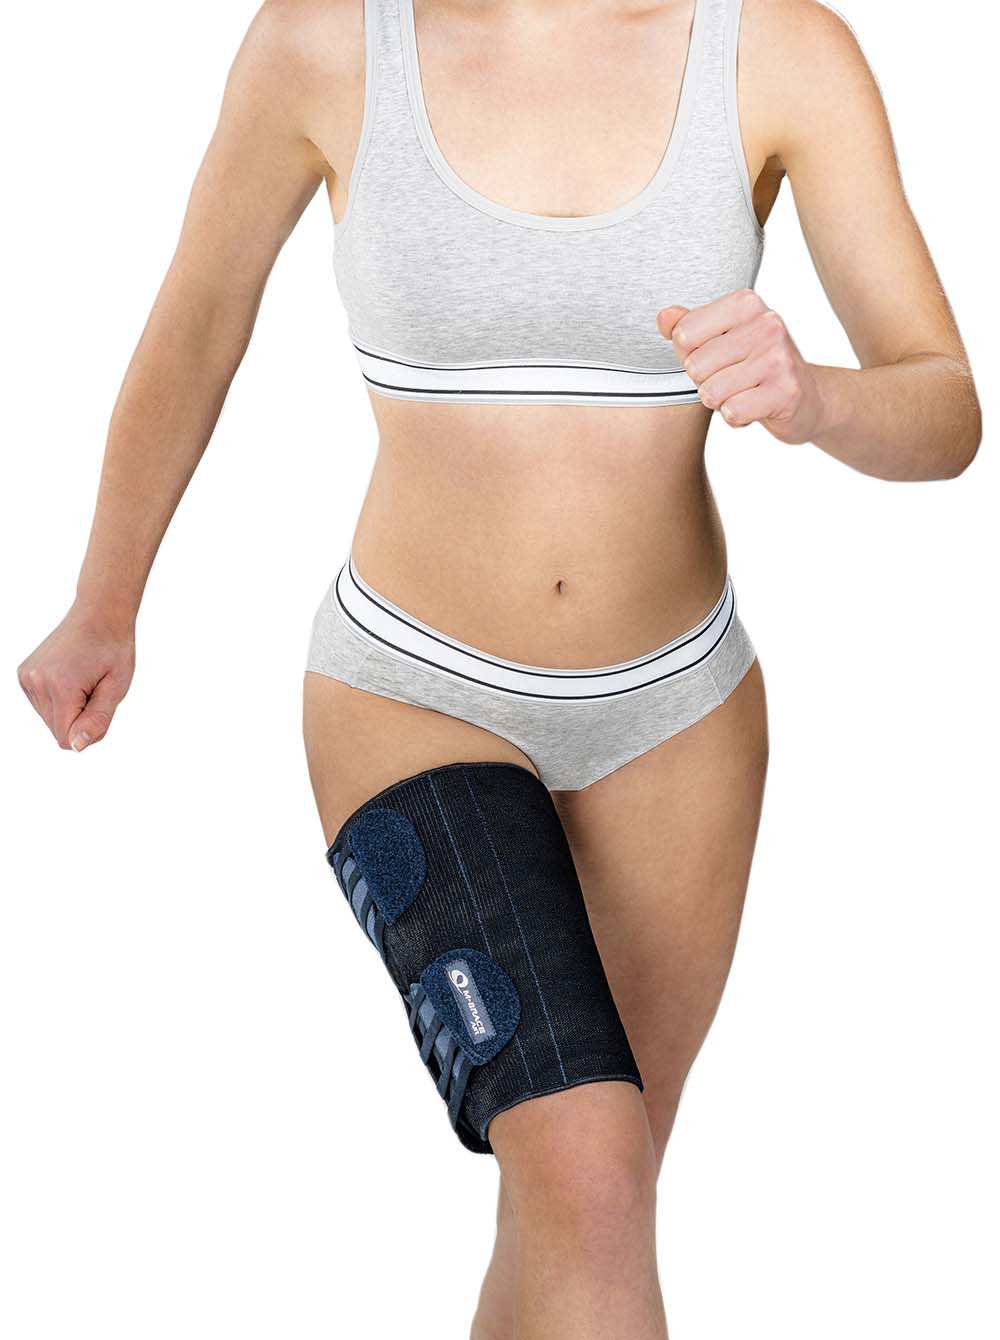  2U2O Thigh Brace Support - Adjustable Compression Hamstring  Quad Wraps – IT Band Upper Leg Wraps for Leg Sprains, Knee Pain, Hip,  Tendonitis Injury, – Athletic Stabilizer for Men, Women 